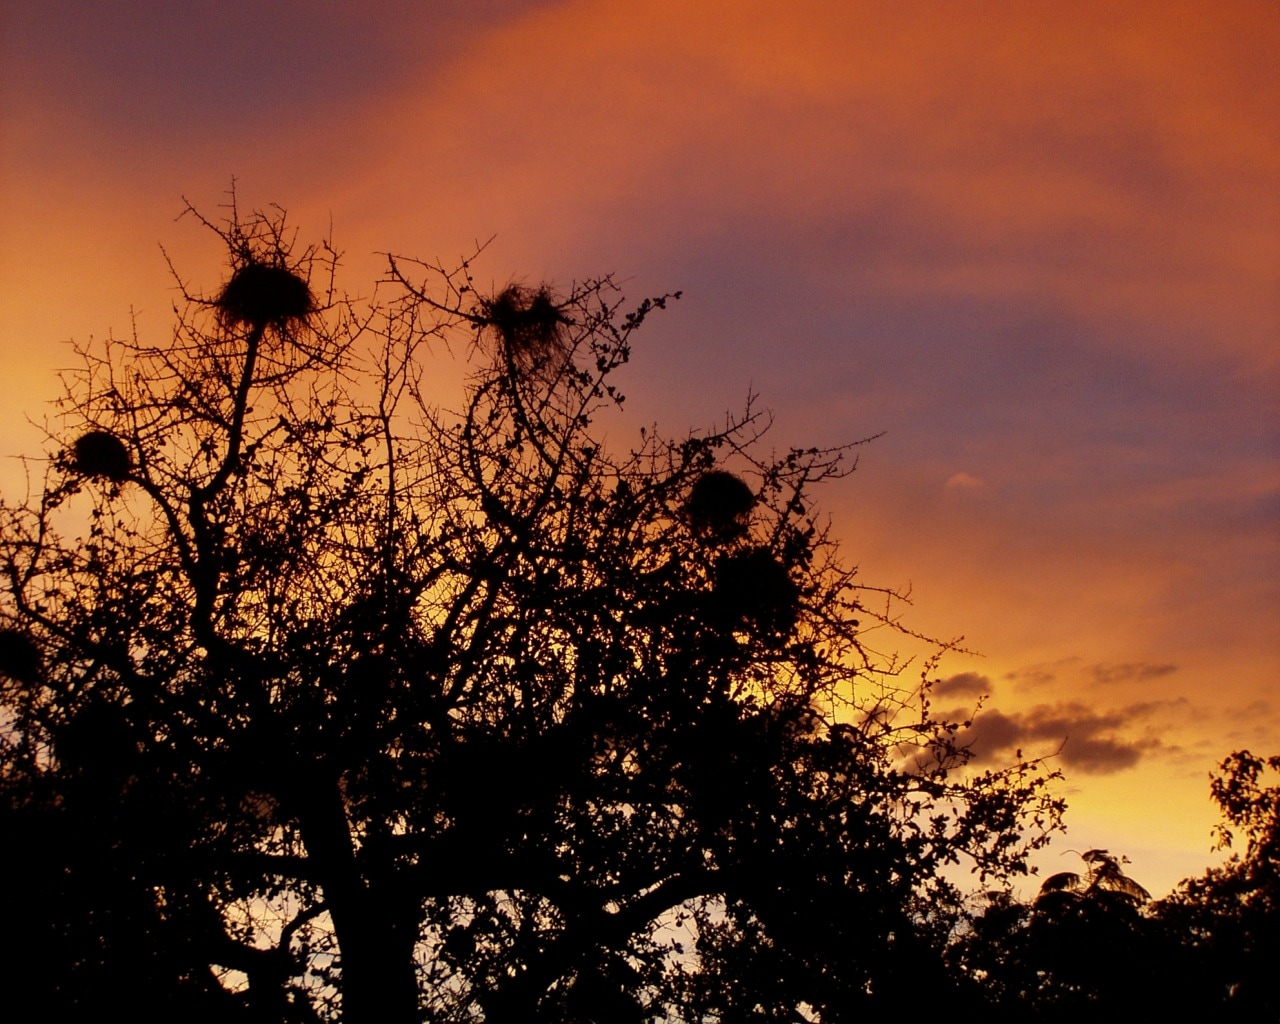 silhouette of tree with bird's nest